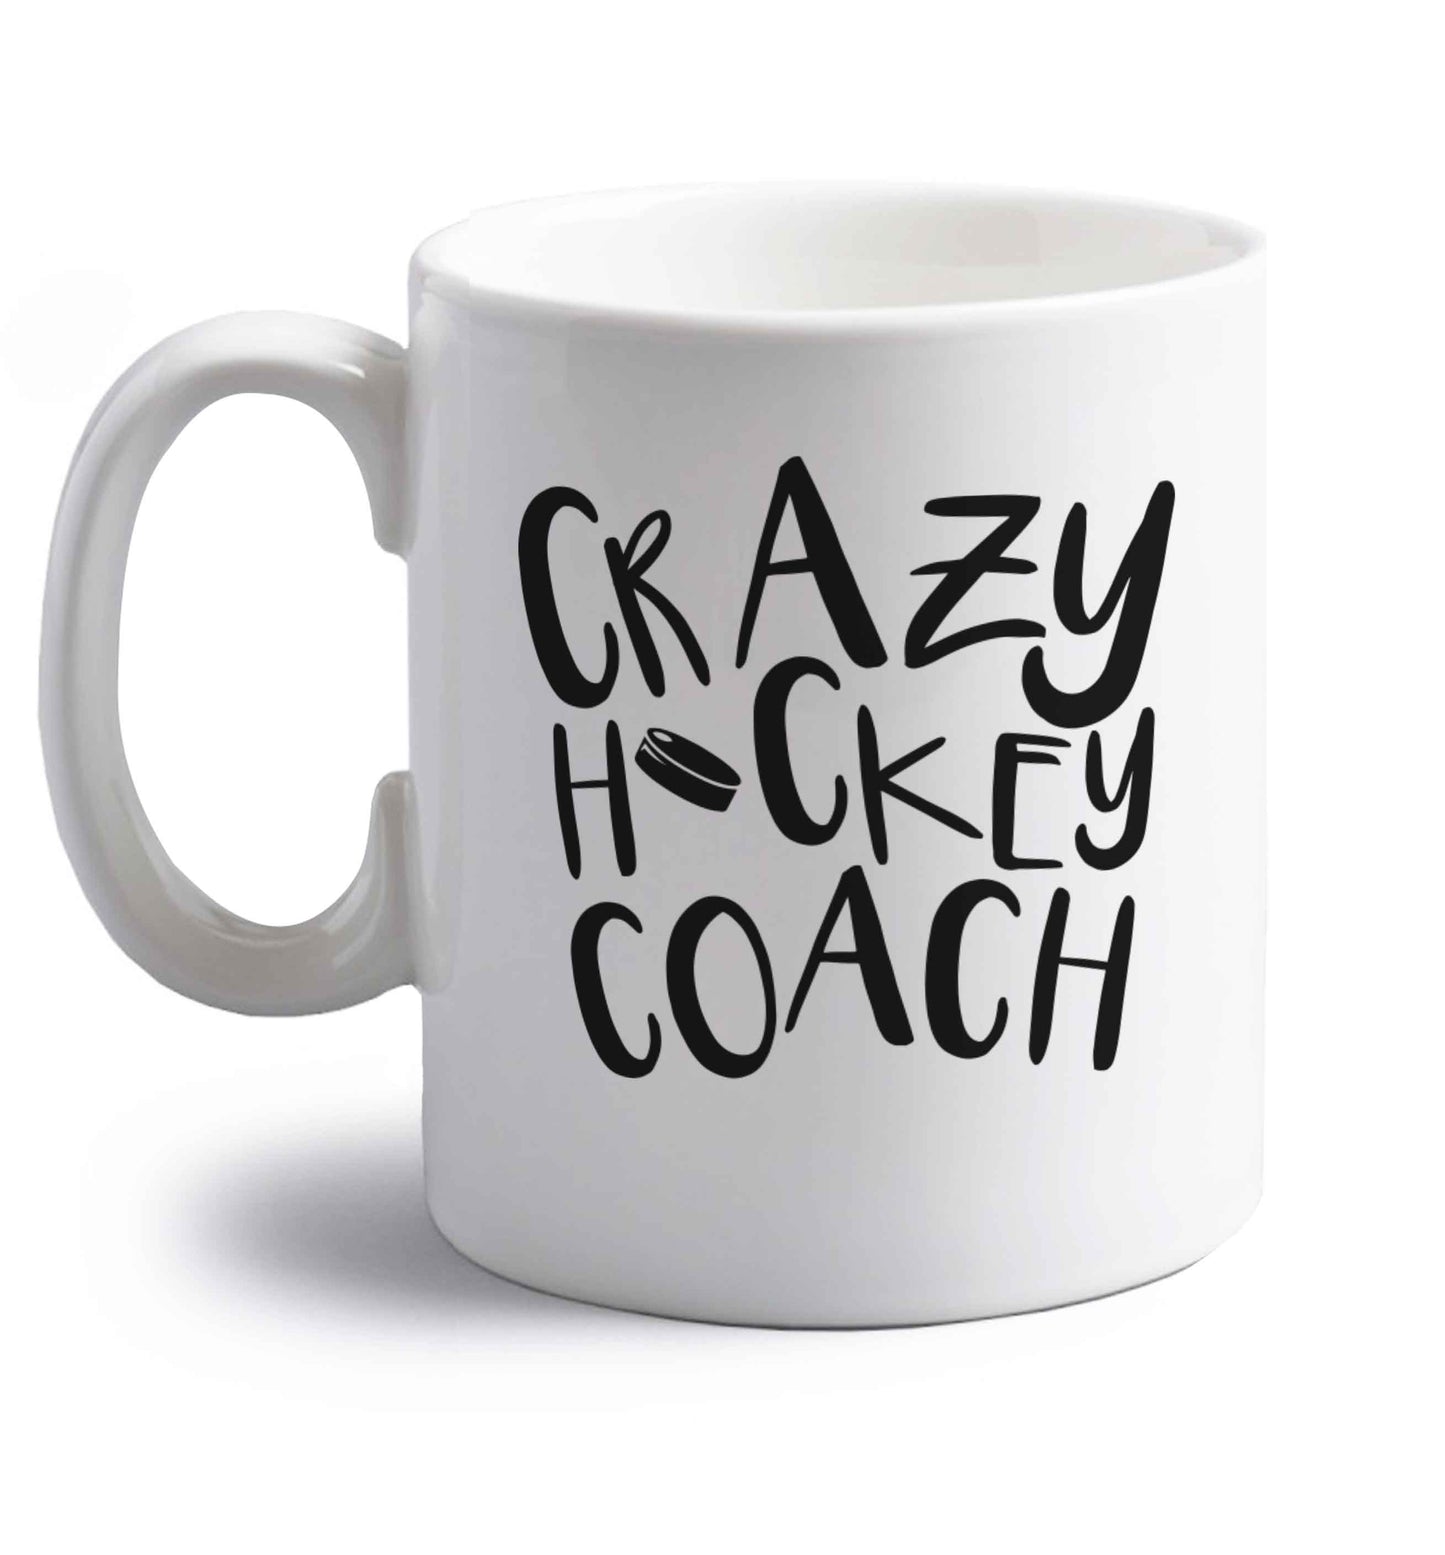 Crazy hockey coach right handed white ceramic mug 